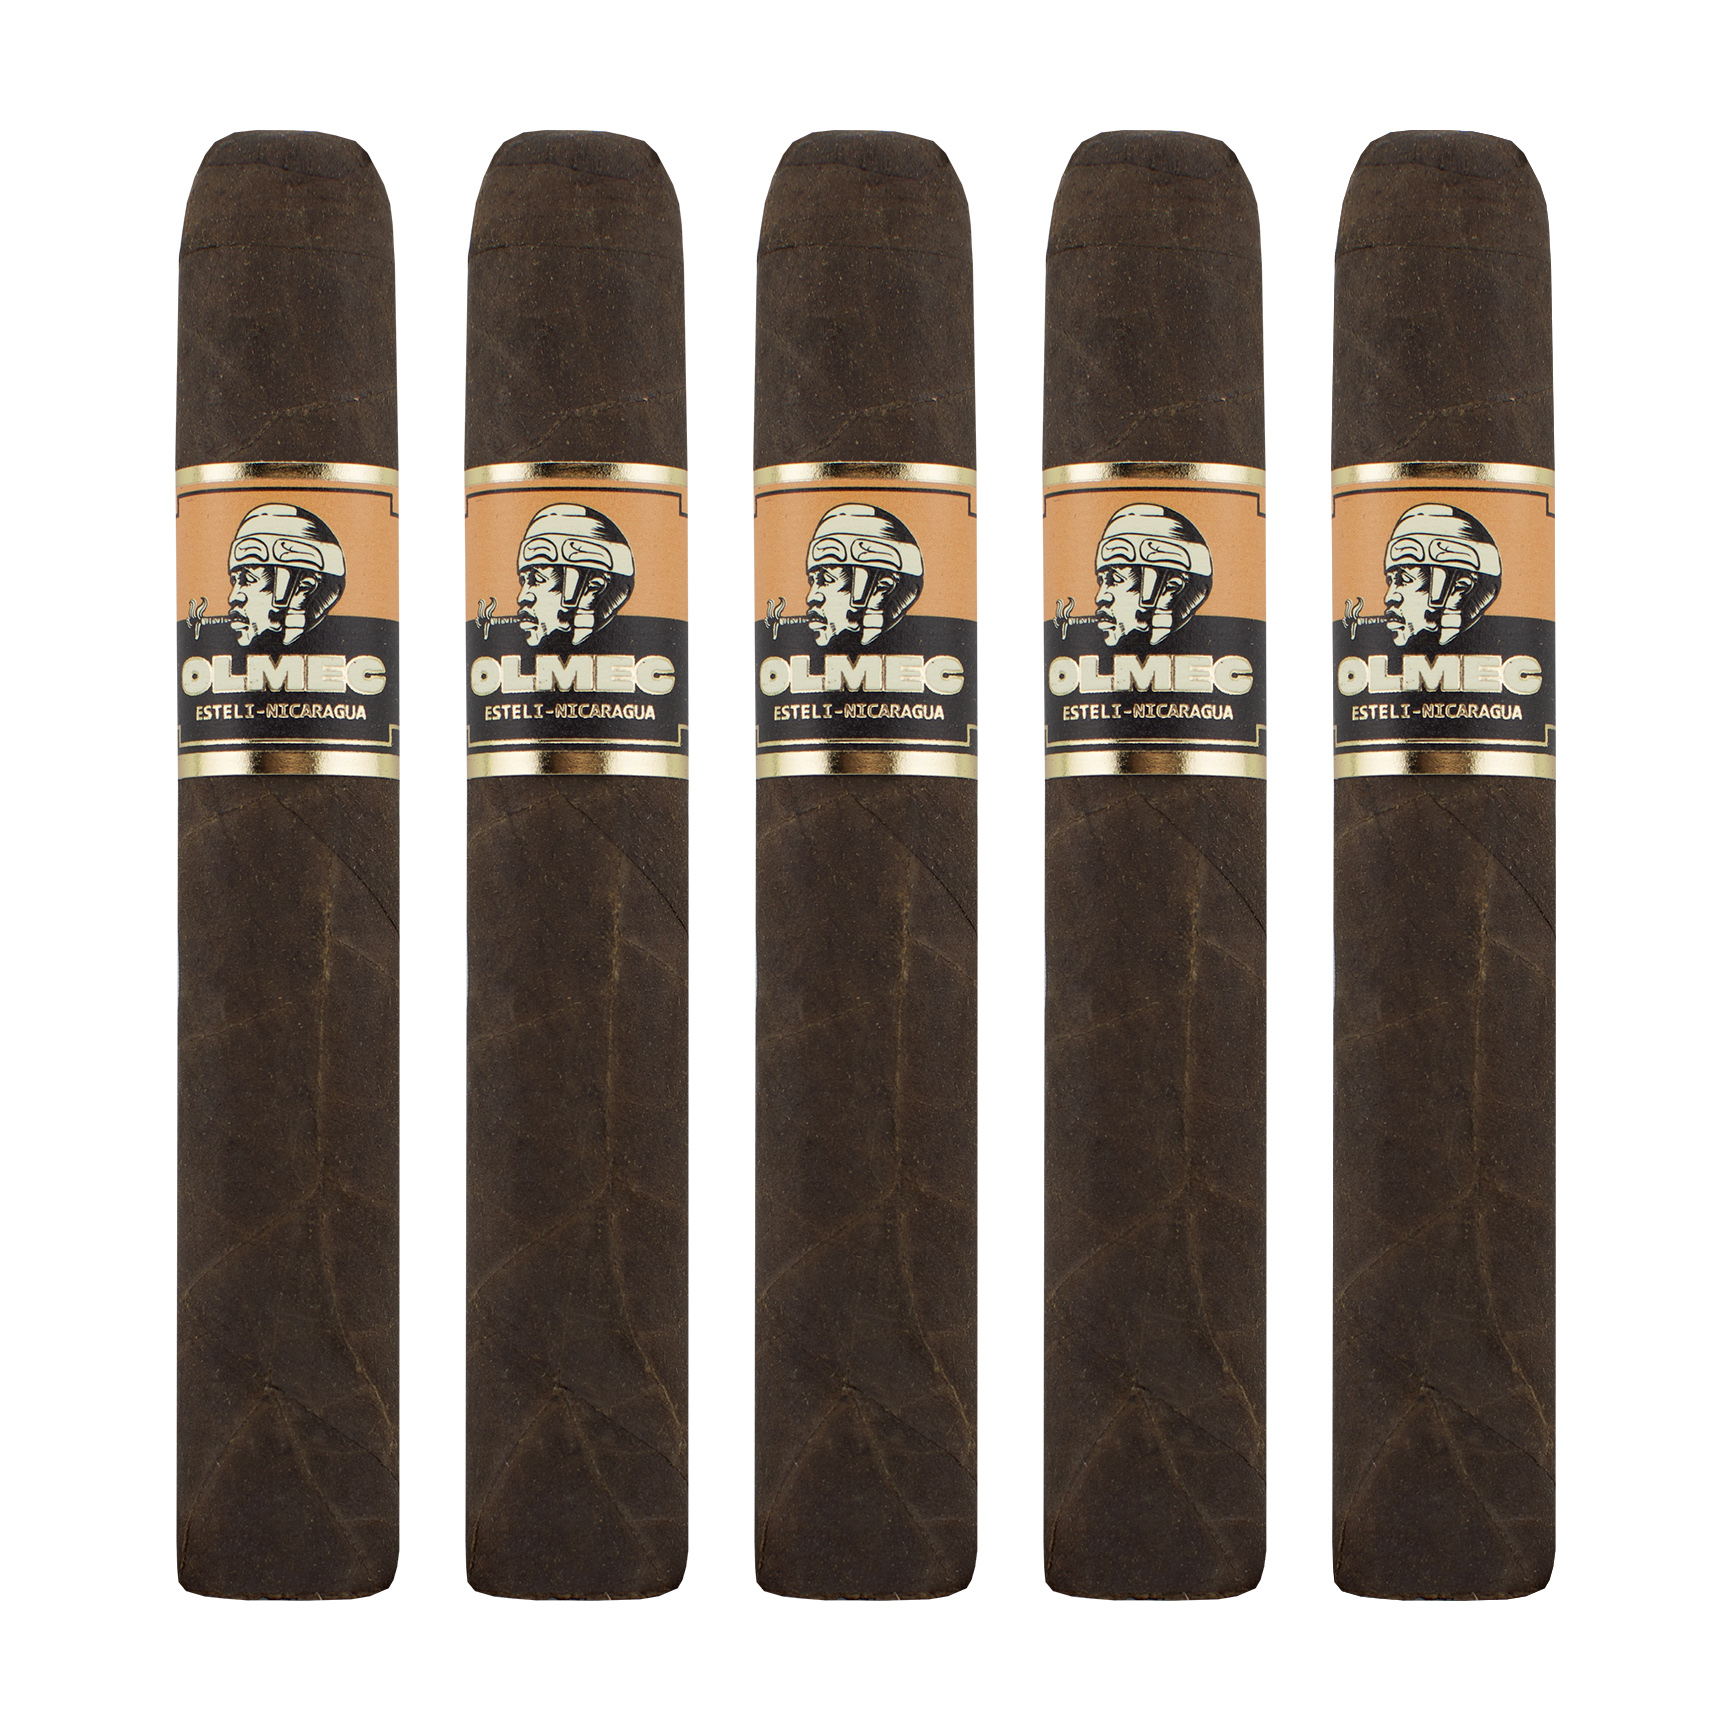 Foundation Olmec Maduro Robusto Cigar - 5 Pack